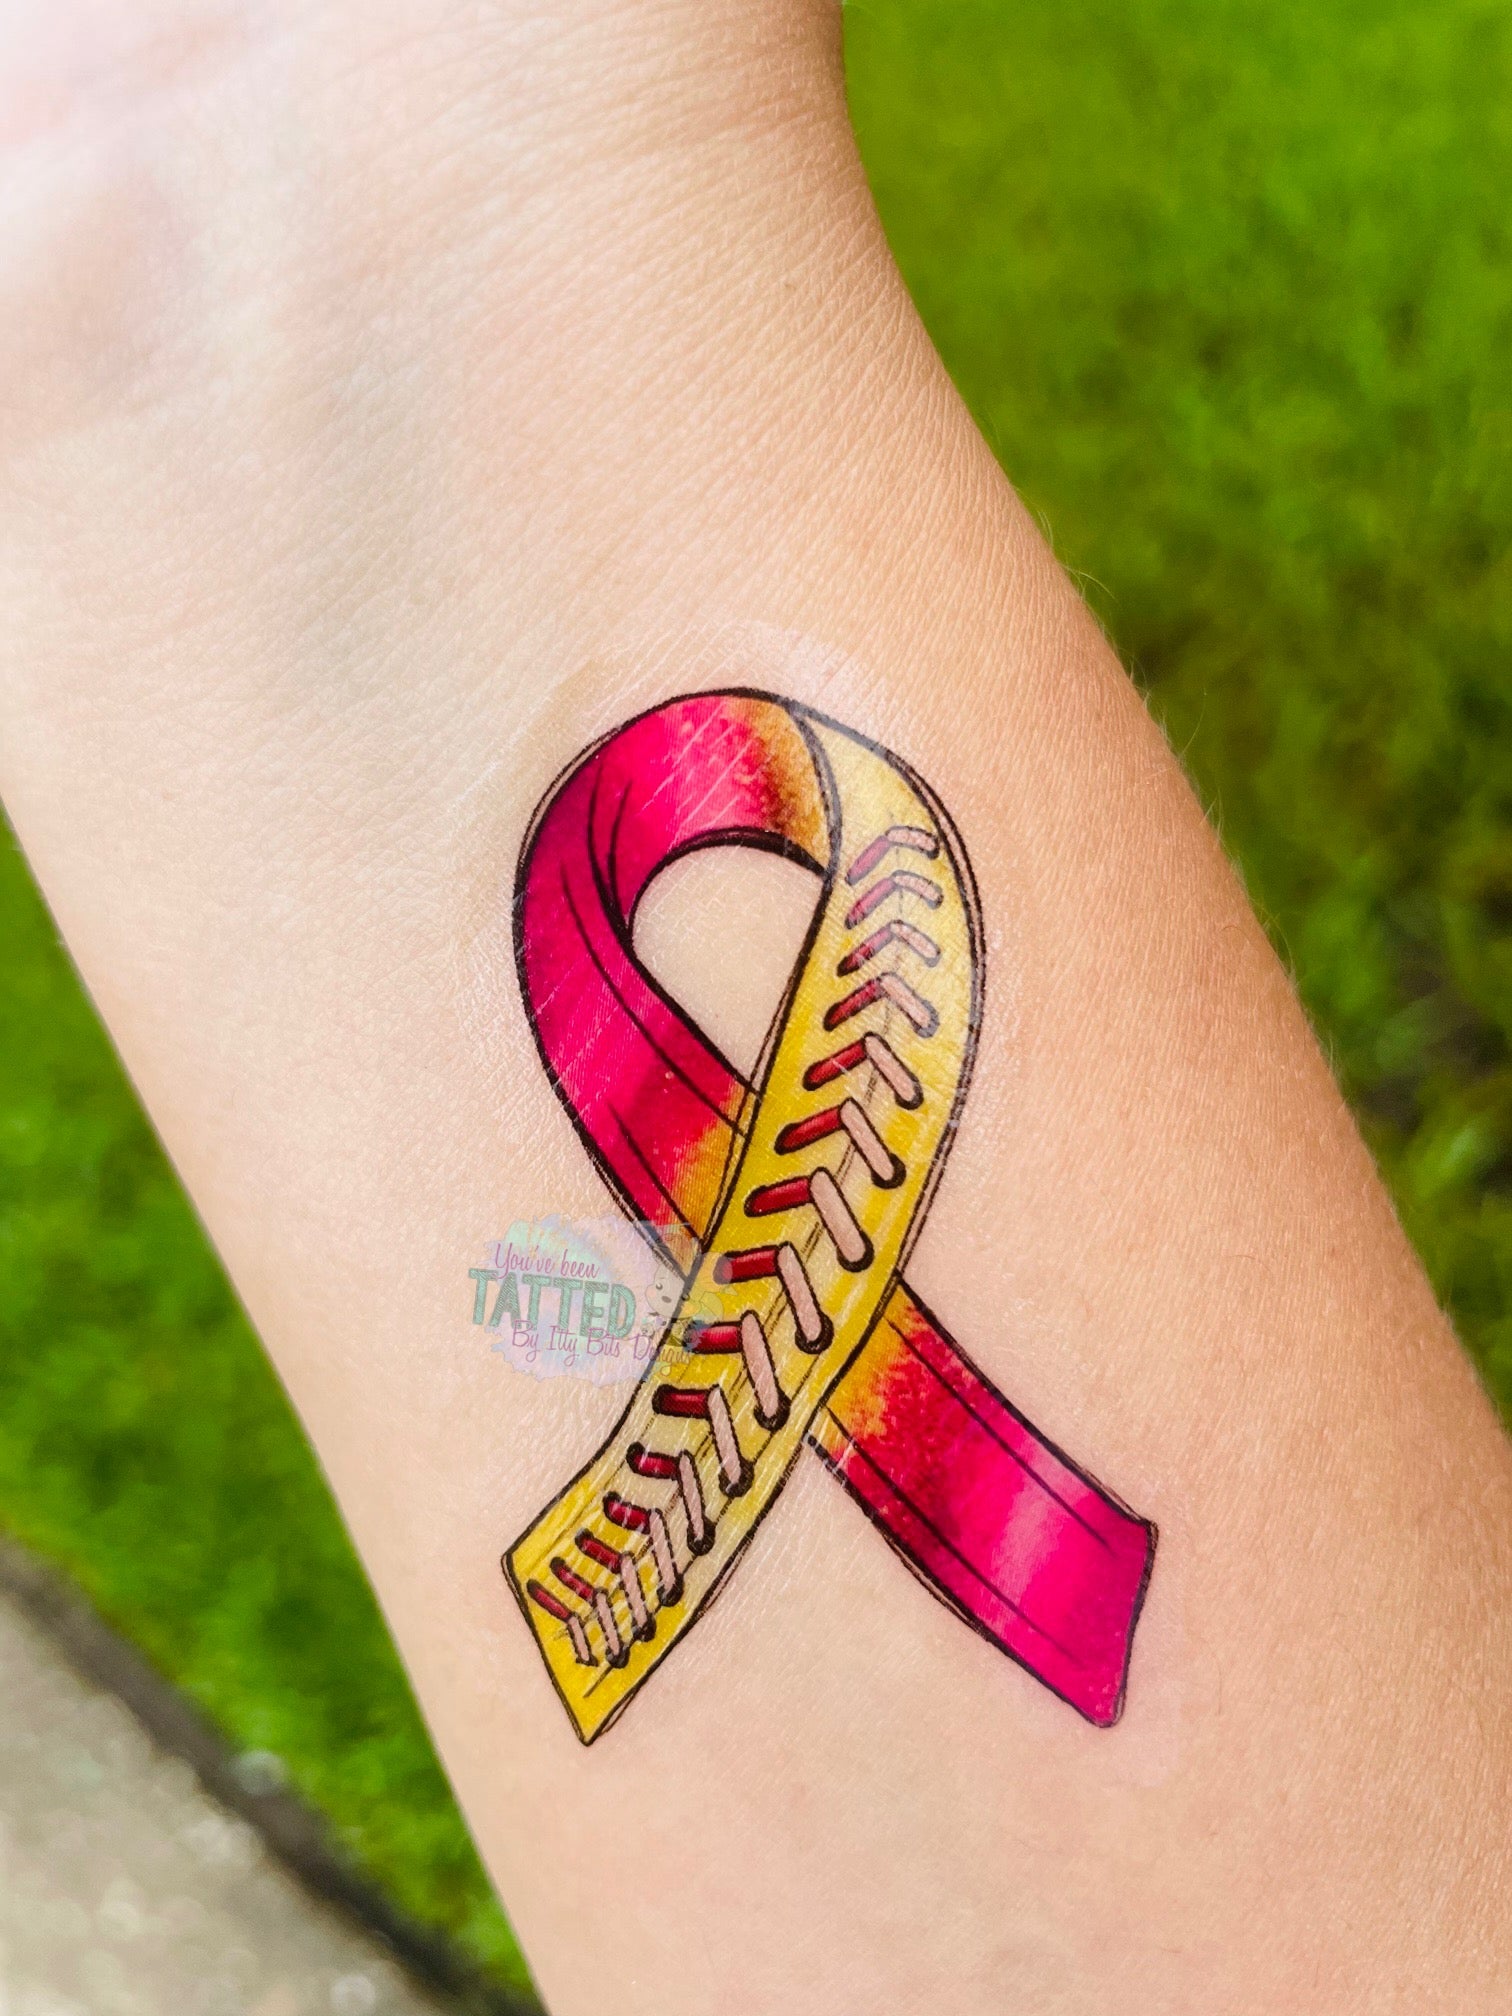 Tattoo shop honors cancer survivors | News | sentinel-echo.com